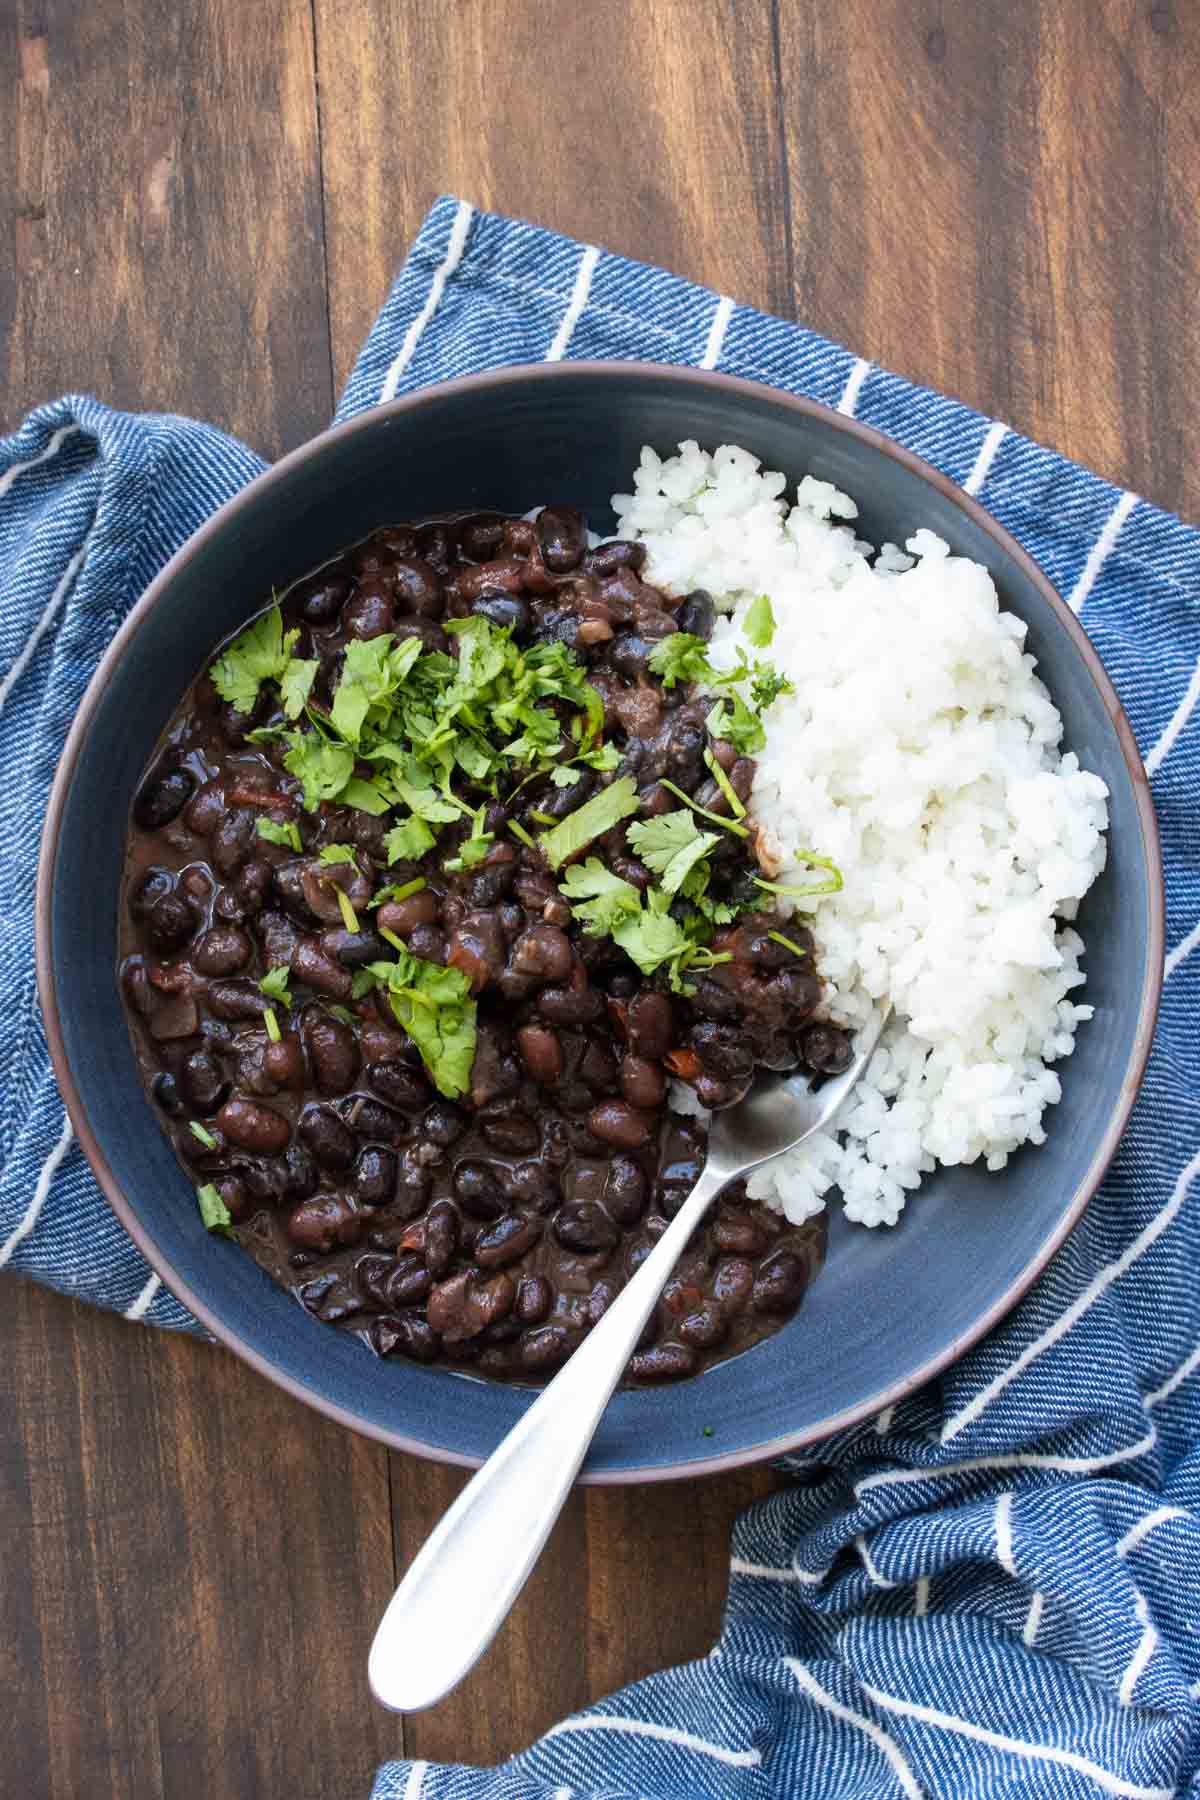 How to Make Black Beans